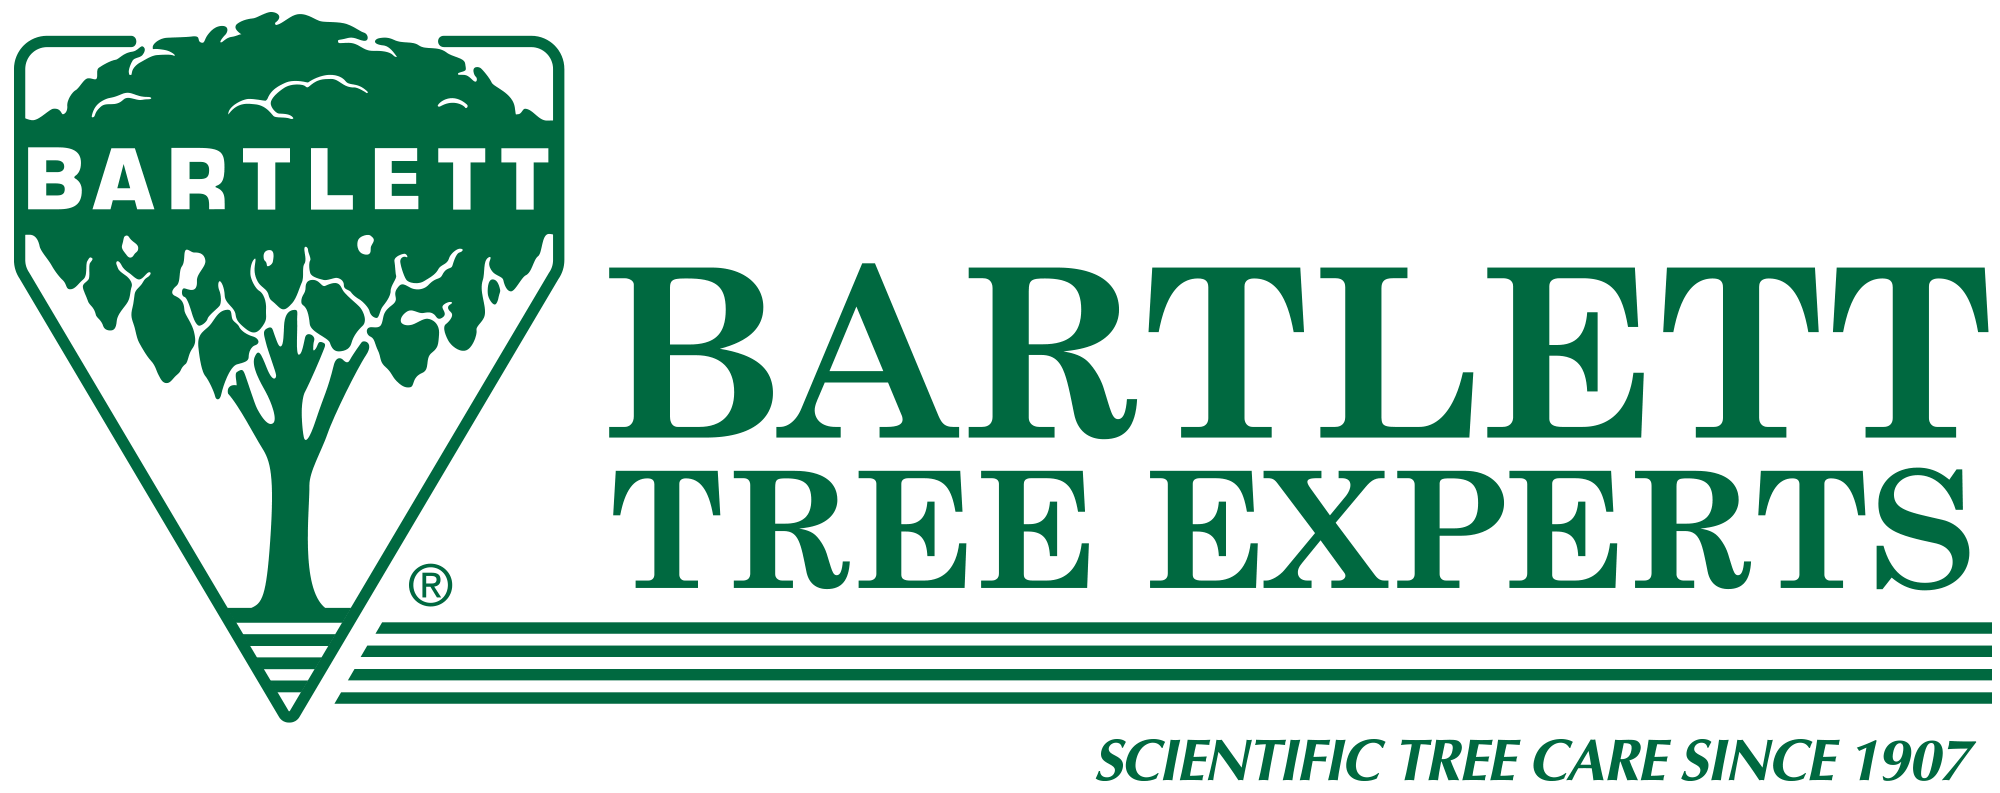 Bartlett-Tree-Experts-Logo-1